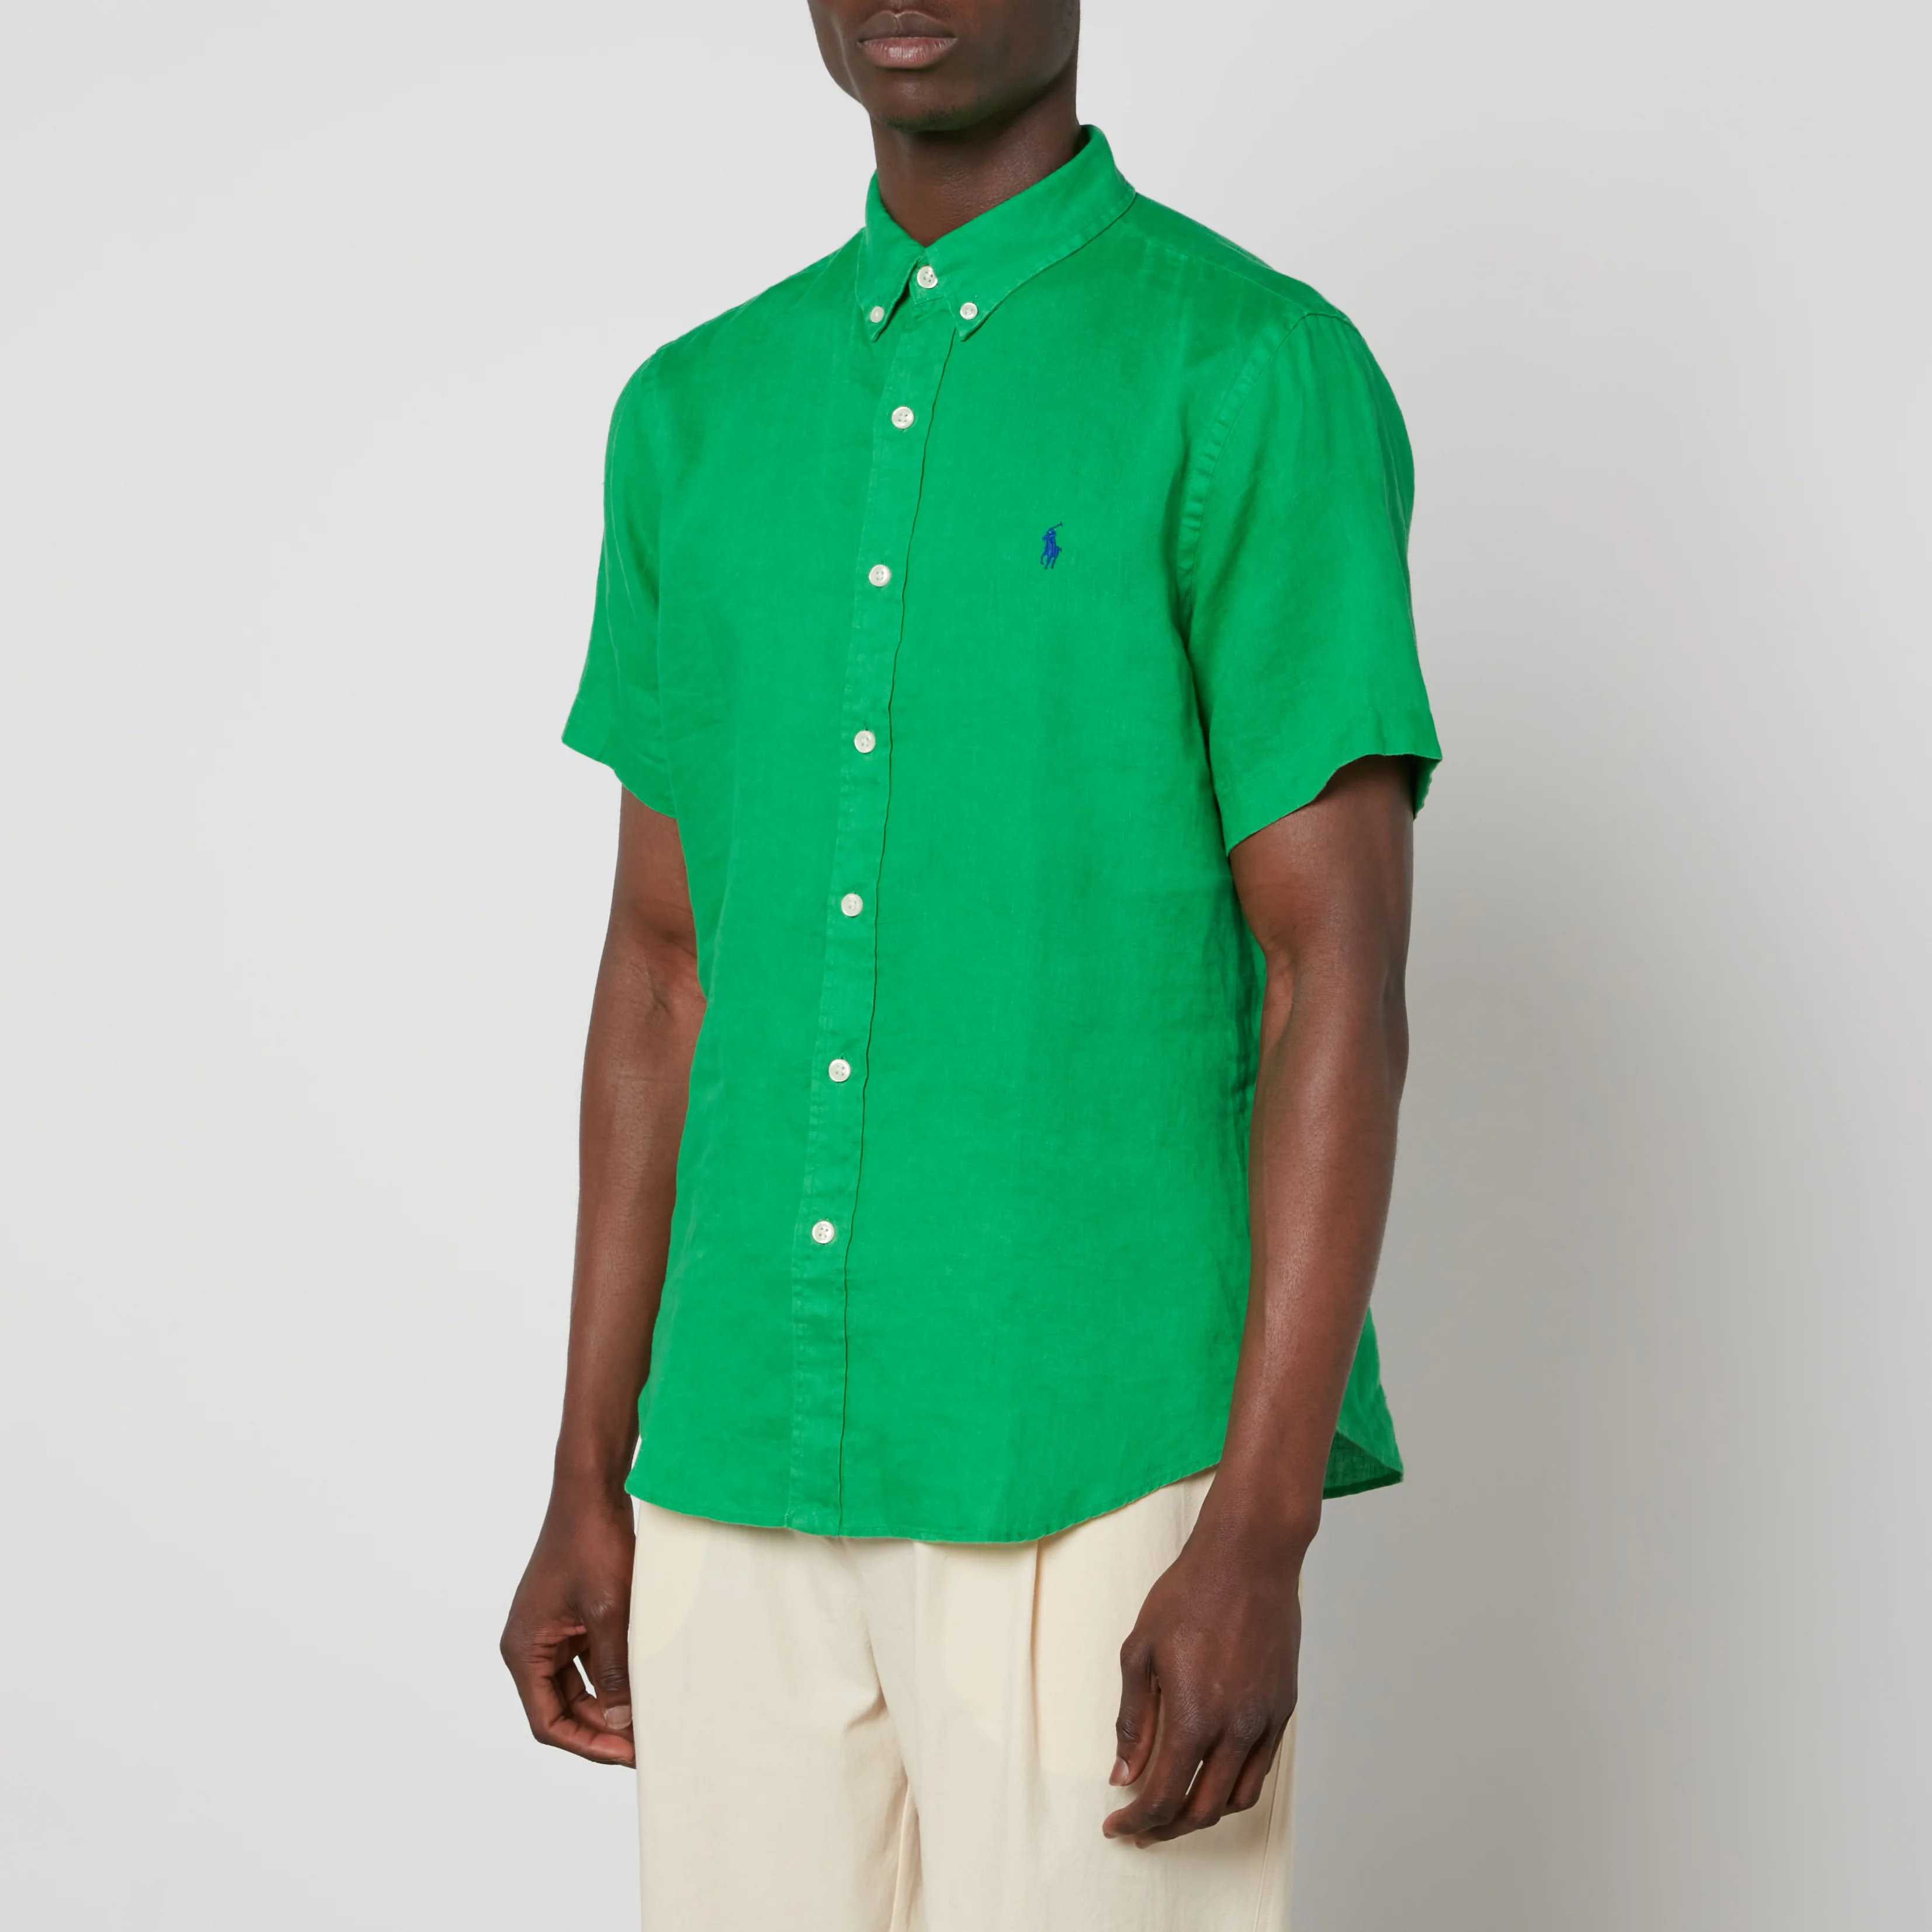 Polo Ralph Lauren Men's Slim Fit Linen Short Sleeved Shirt - Golf Green Image 1